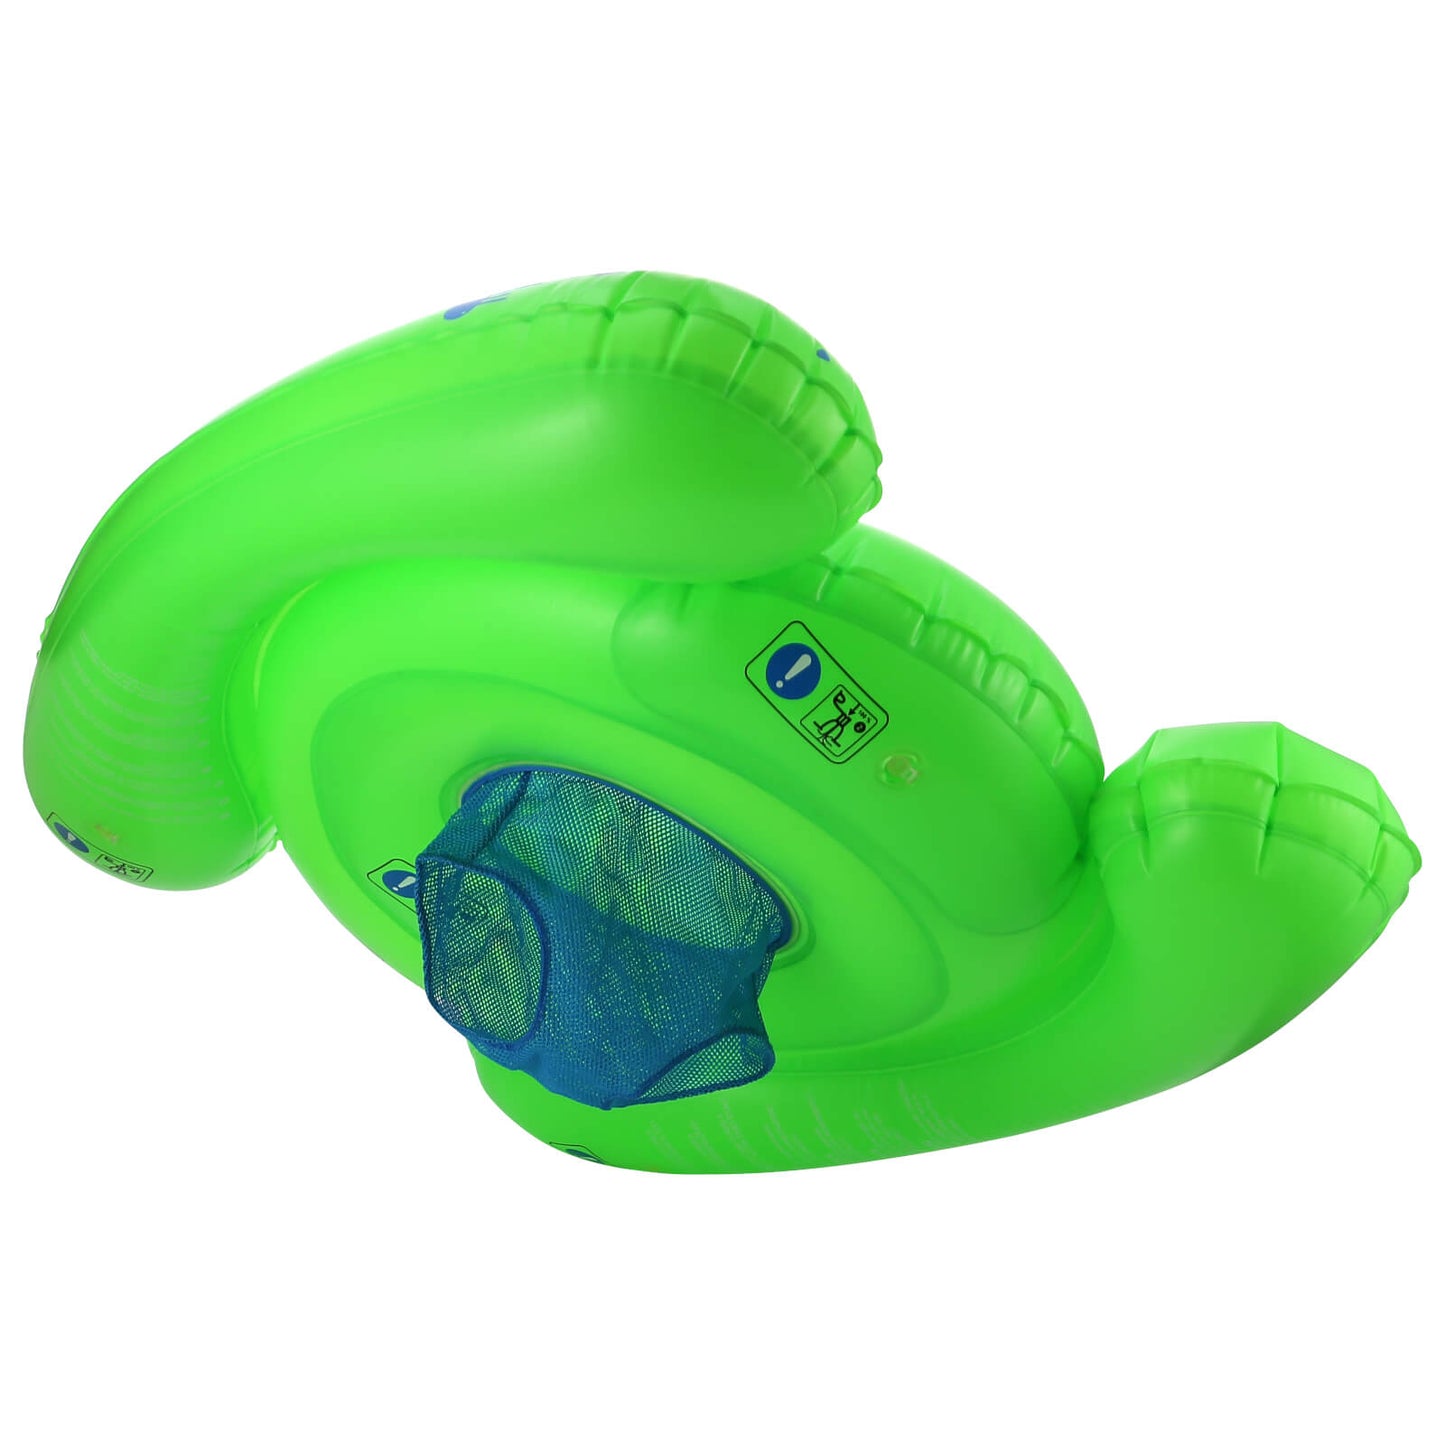 Aqua Sphere Baby Swim Seat Swimming Accessory Alternate 1